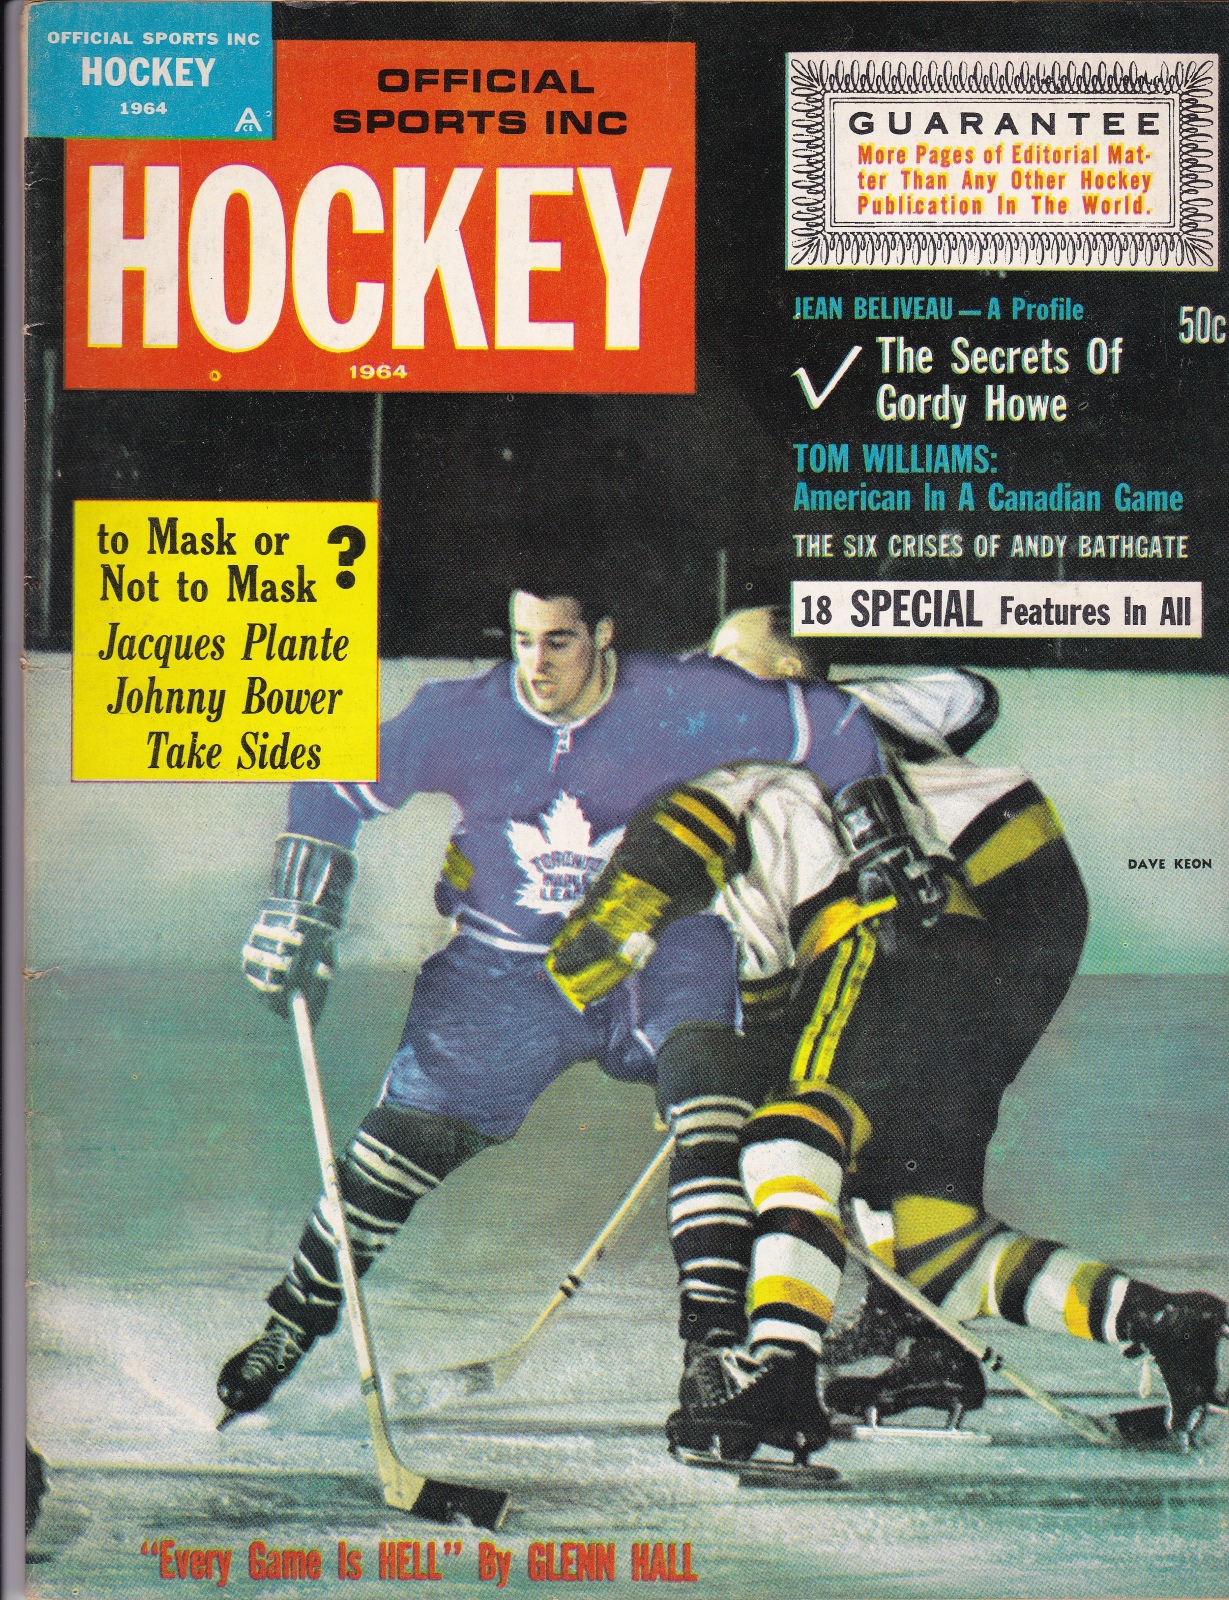 Hockey Magazine Vol 1 Number 4, 1964